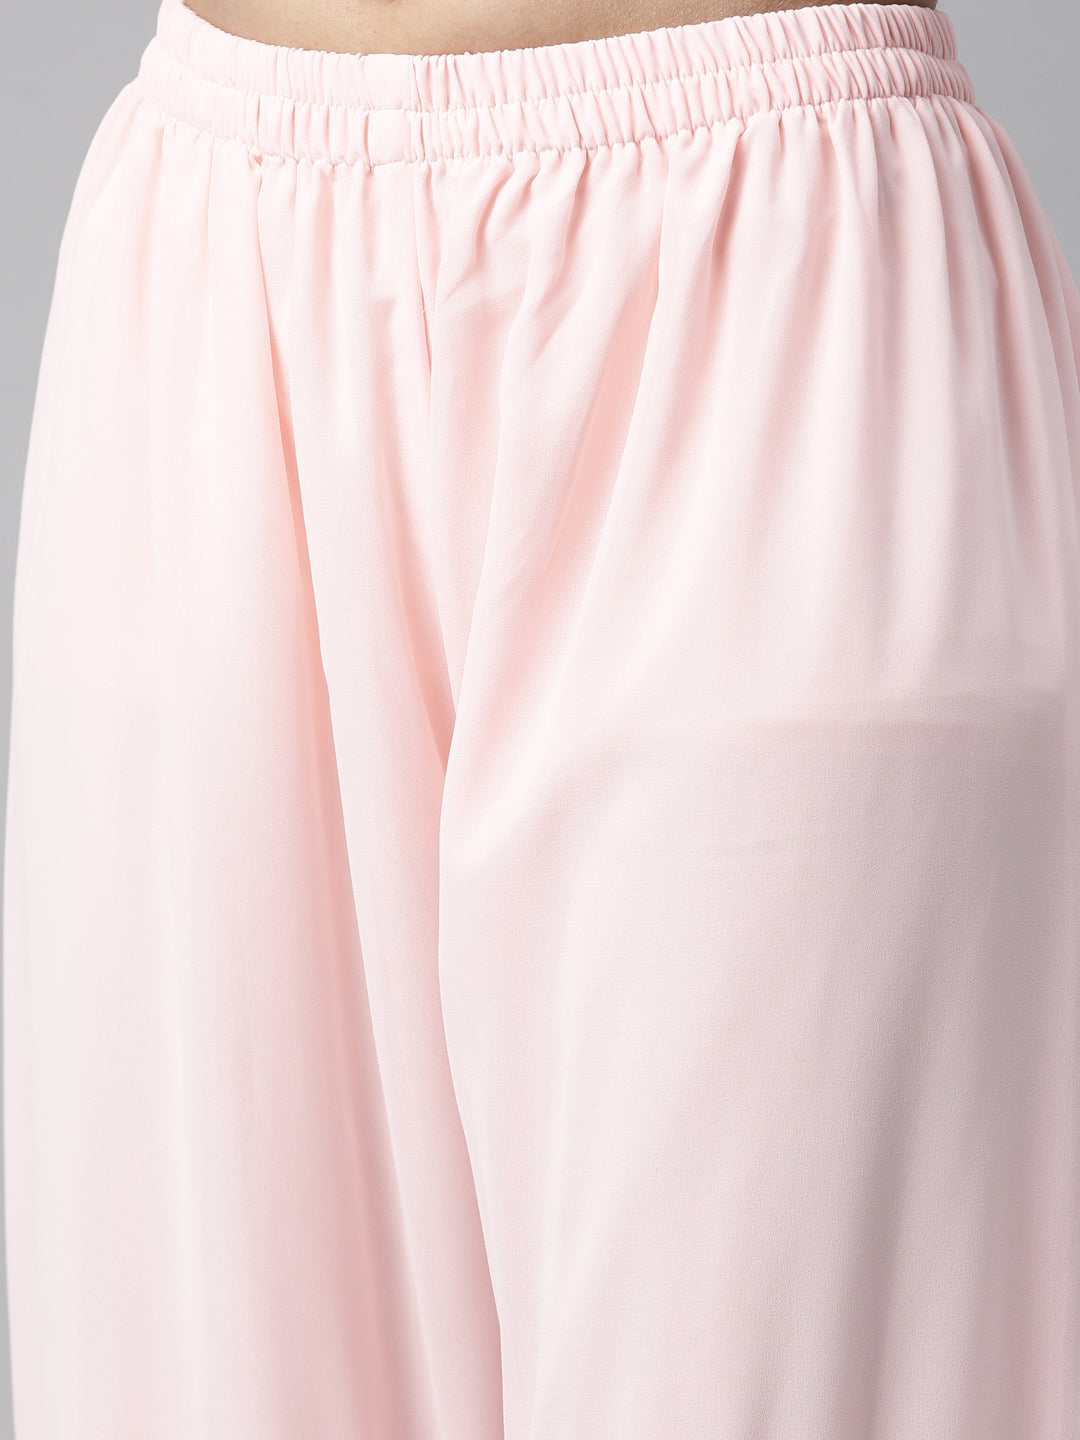 Neeru's Pink Color Georgette Fabric Kurta Set